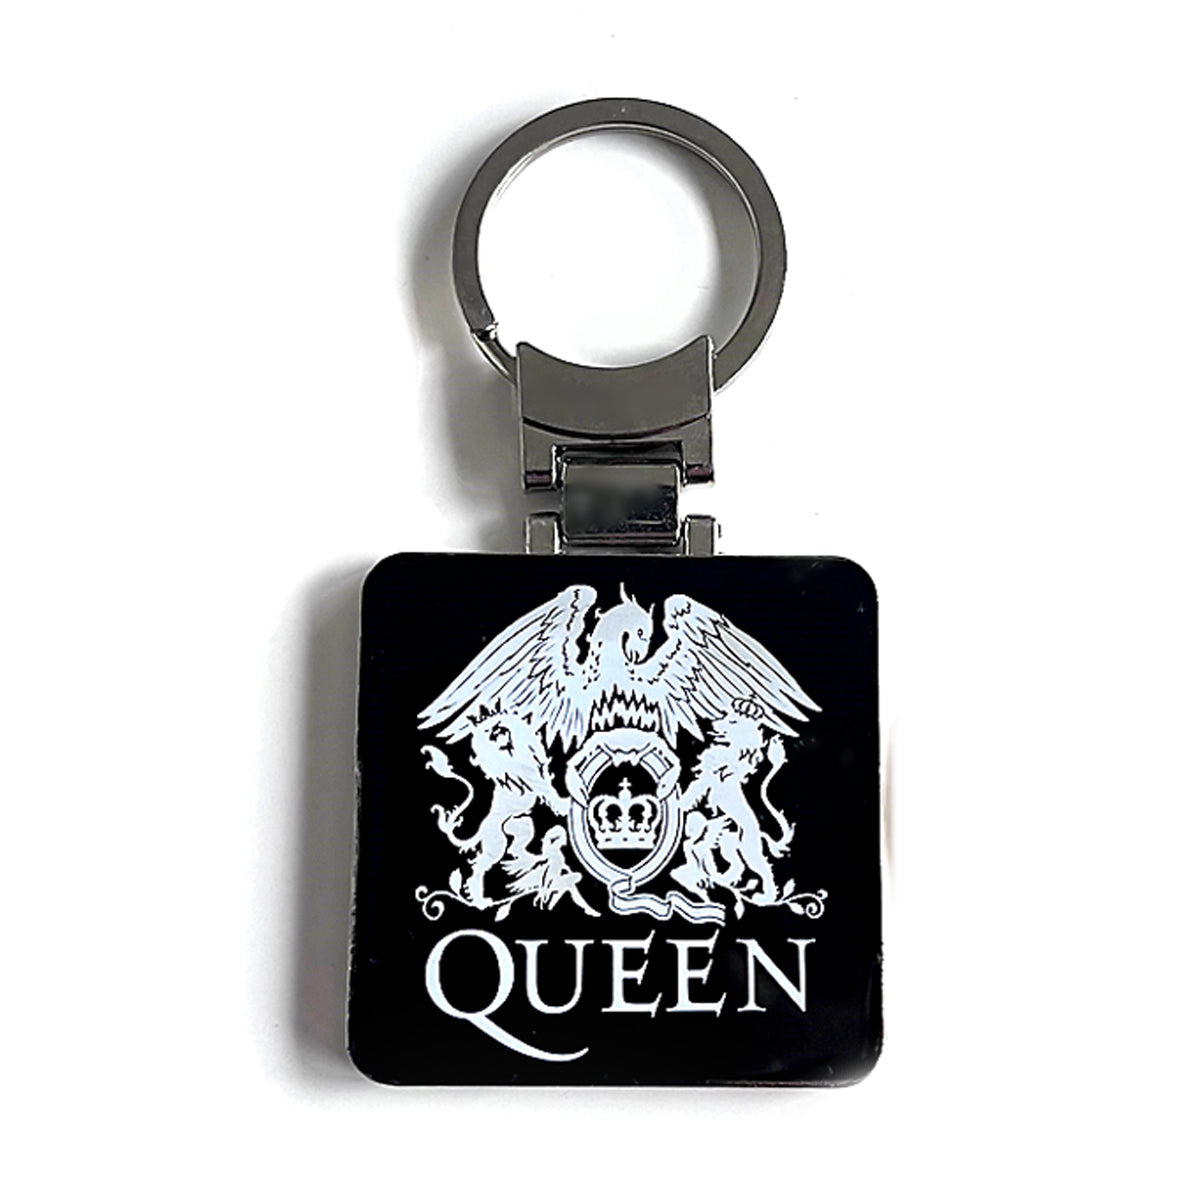 Queen - Crest 3 Keyring Set